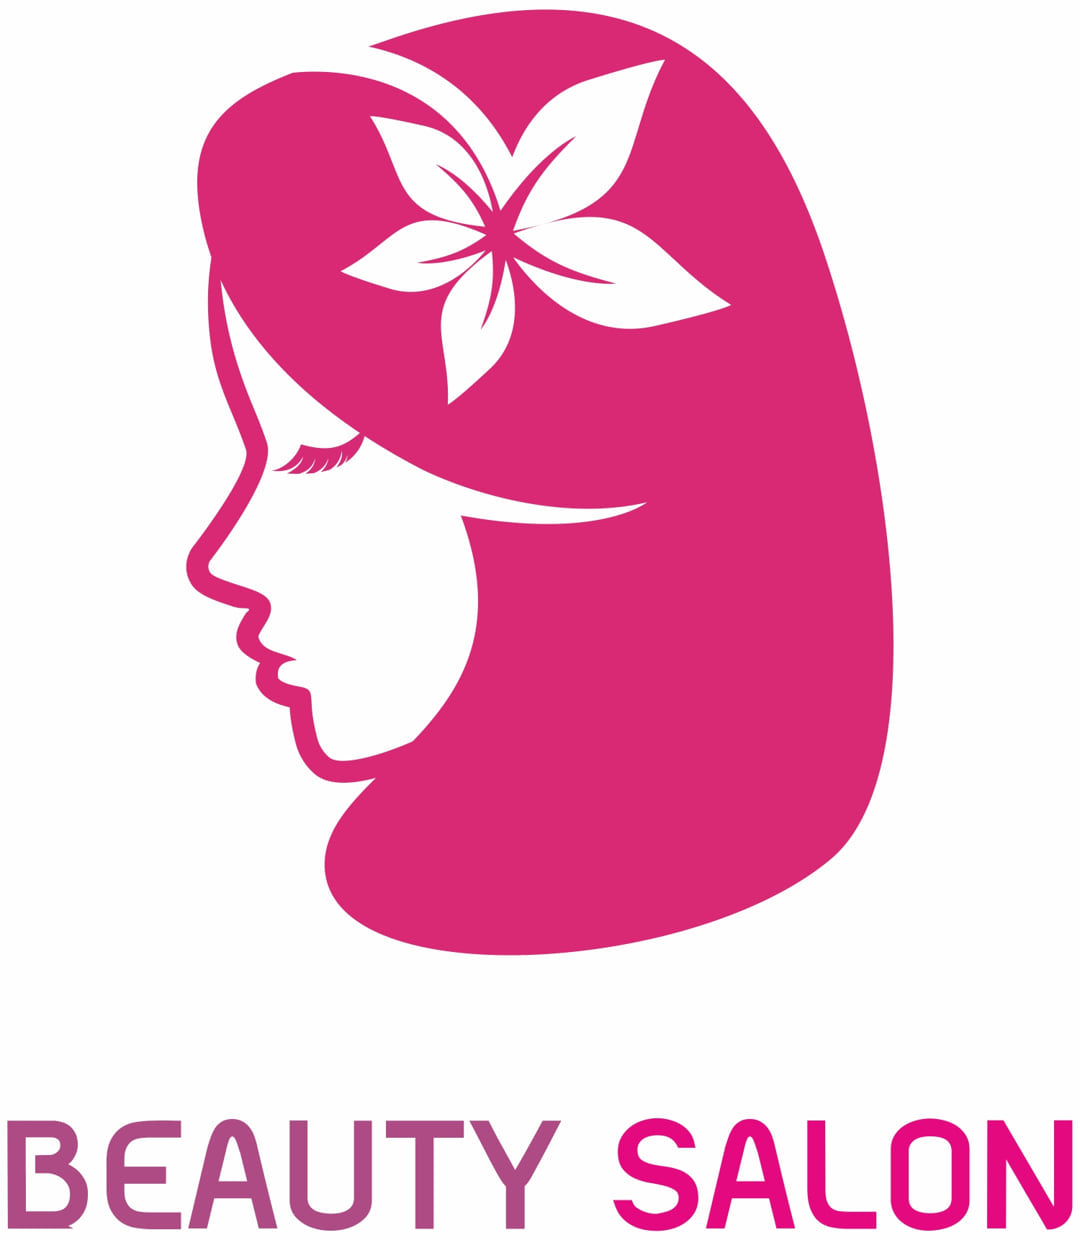 Beauty Salon Wall Sticker